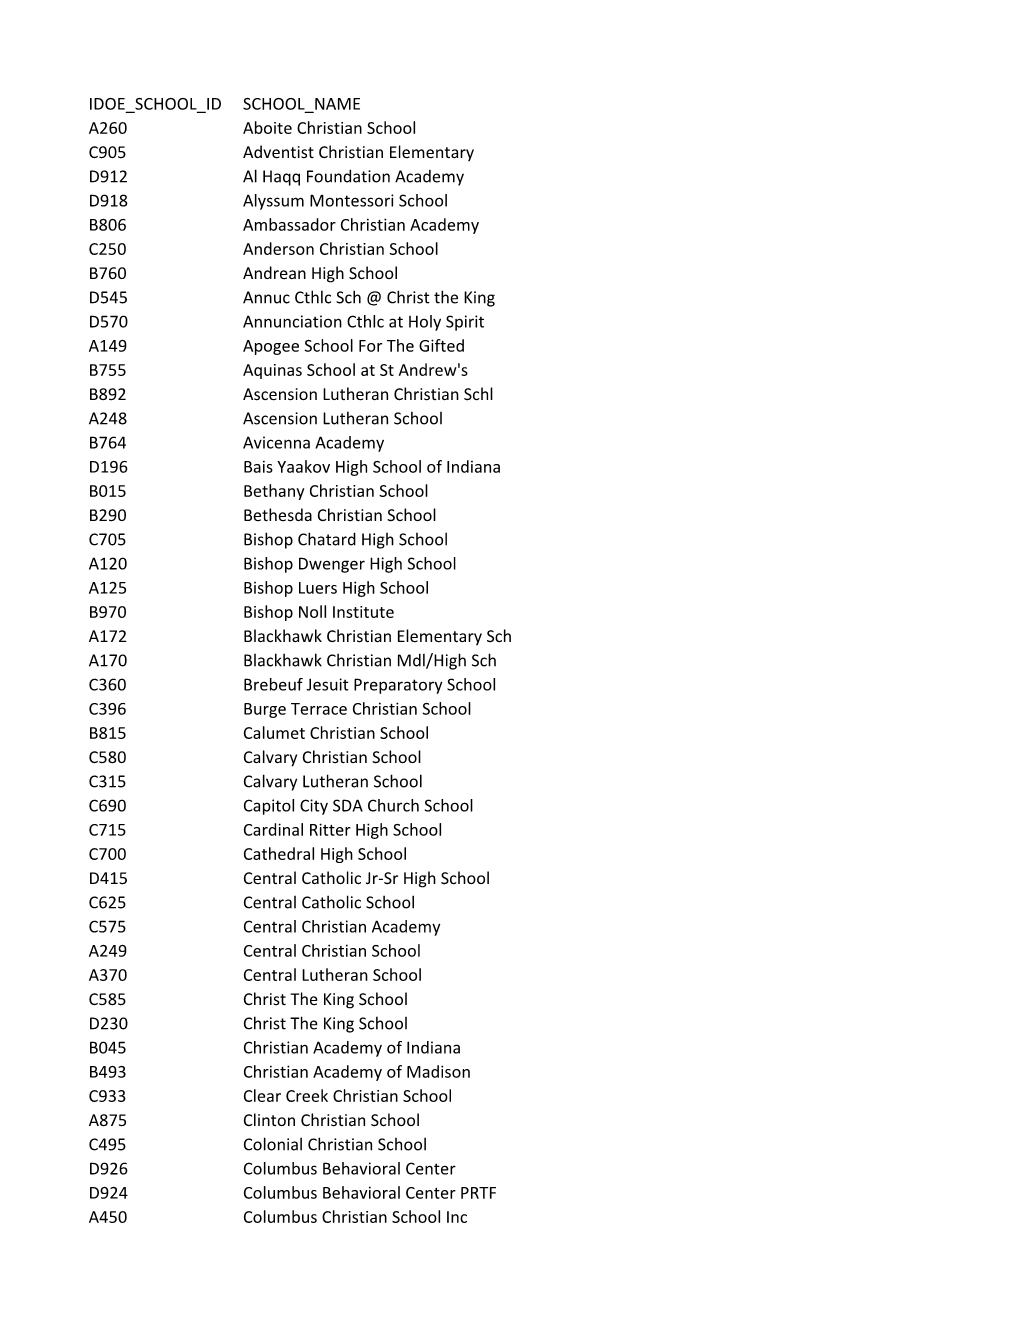 List of Non-Public Schools